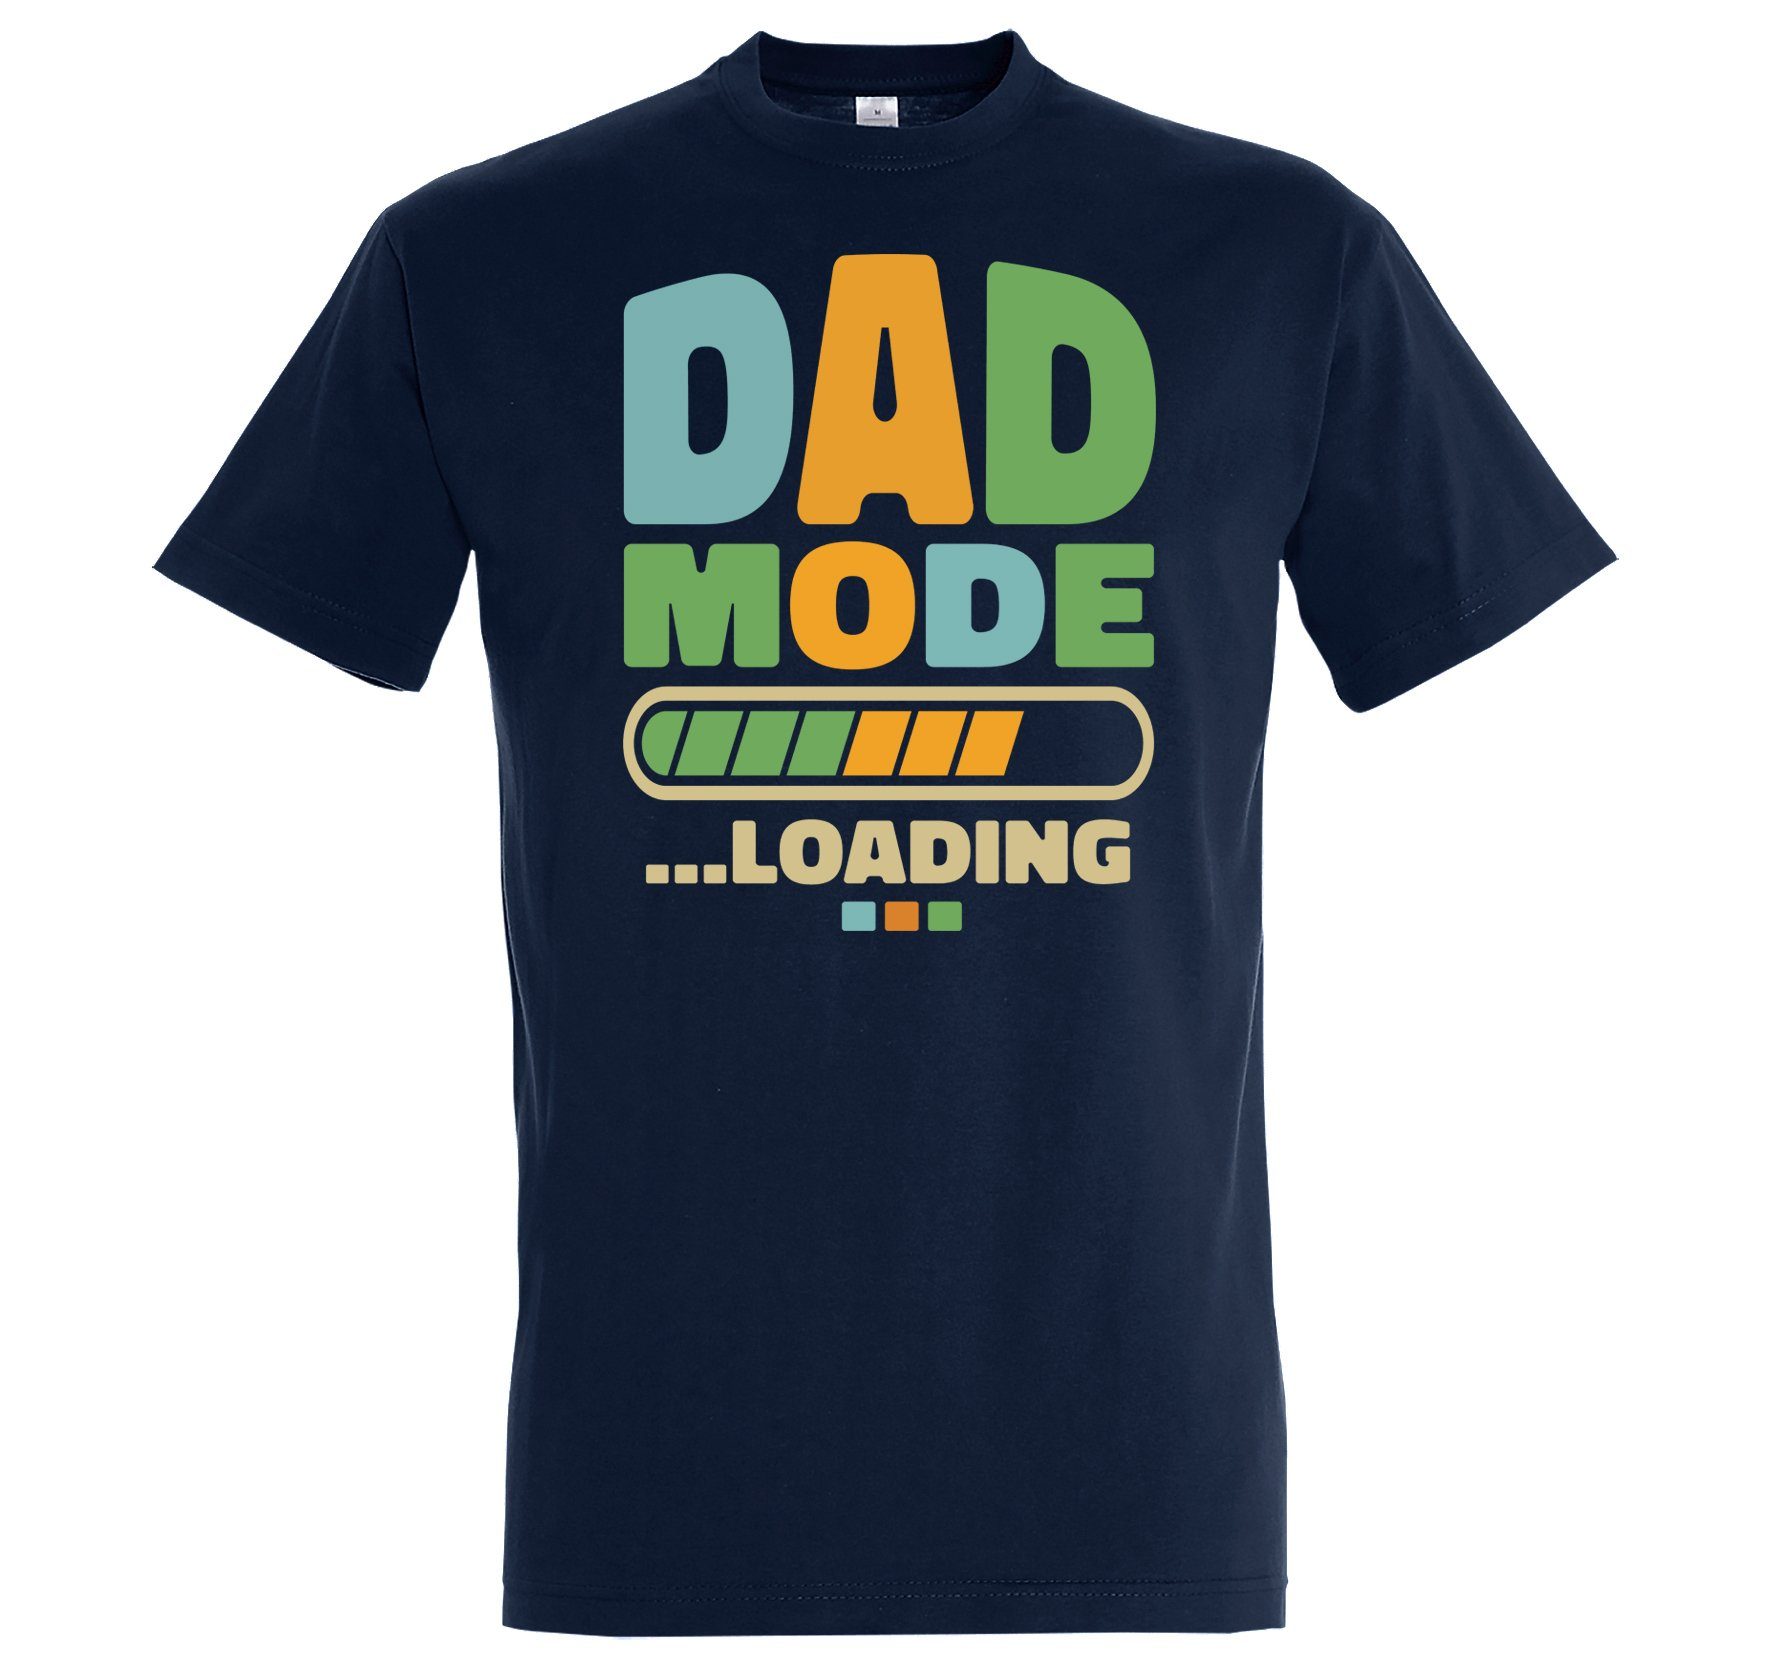 T-Shirt Shirt im Loading Youth Fun-Look Navy DAD Designz Mode Herren